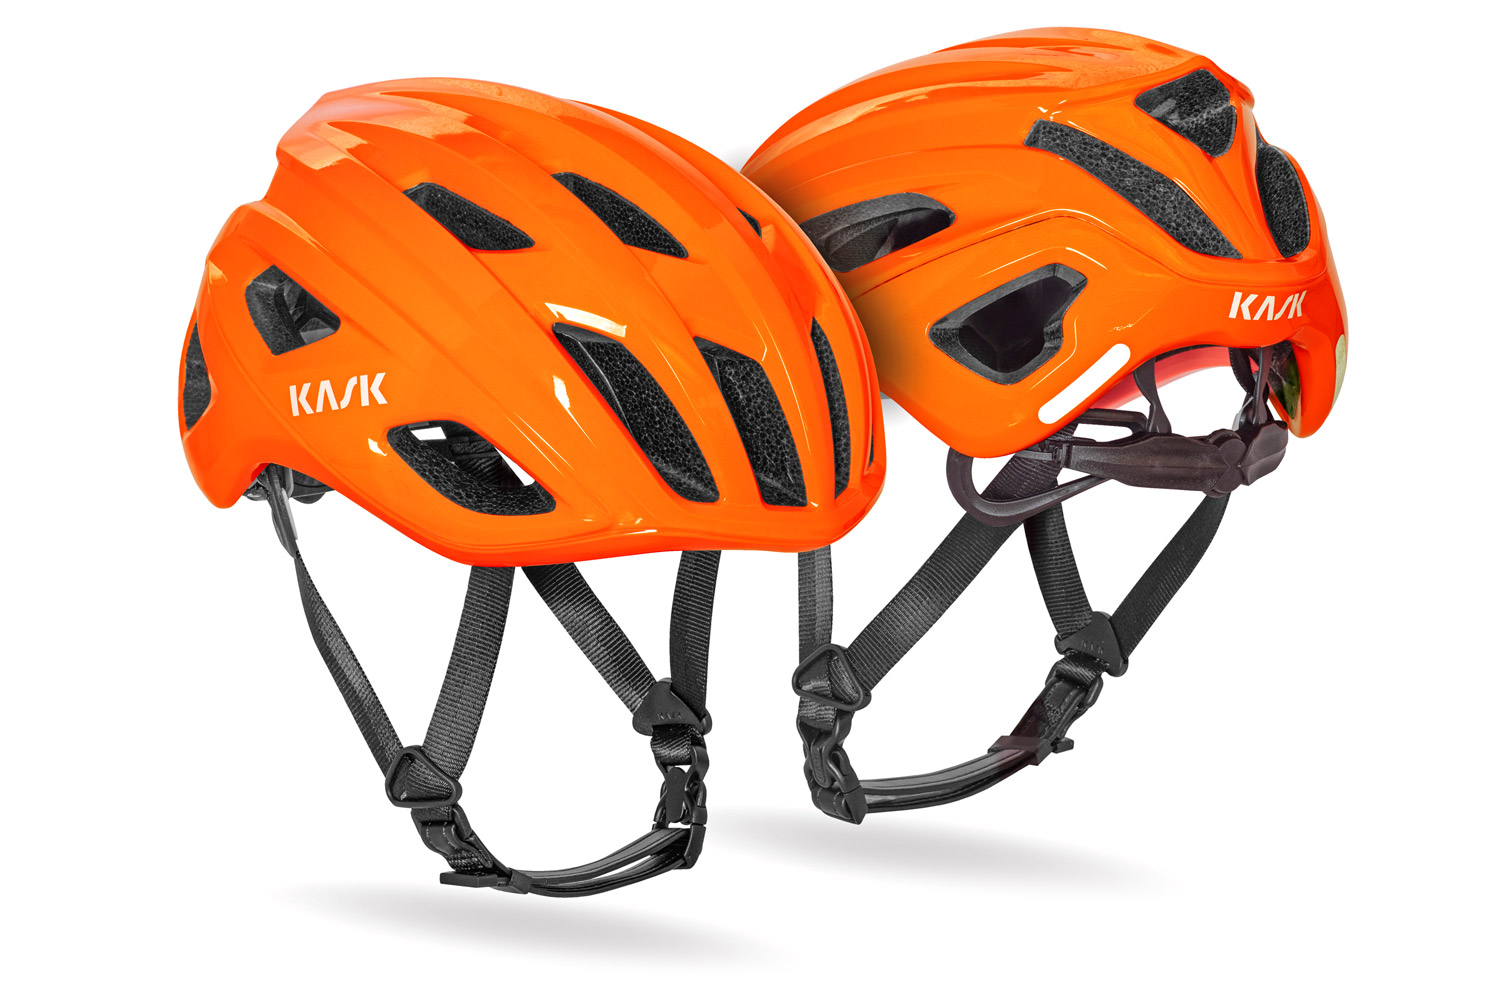 Kask-Mojito3-road-helmet_updated-redesigned-lightweight-fully-vented-semi-aero-road-bike-helmet_front-and-back.jpg